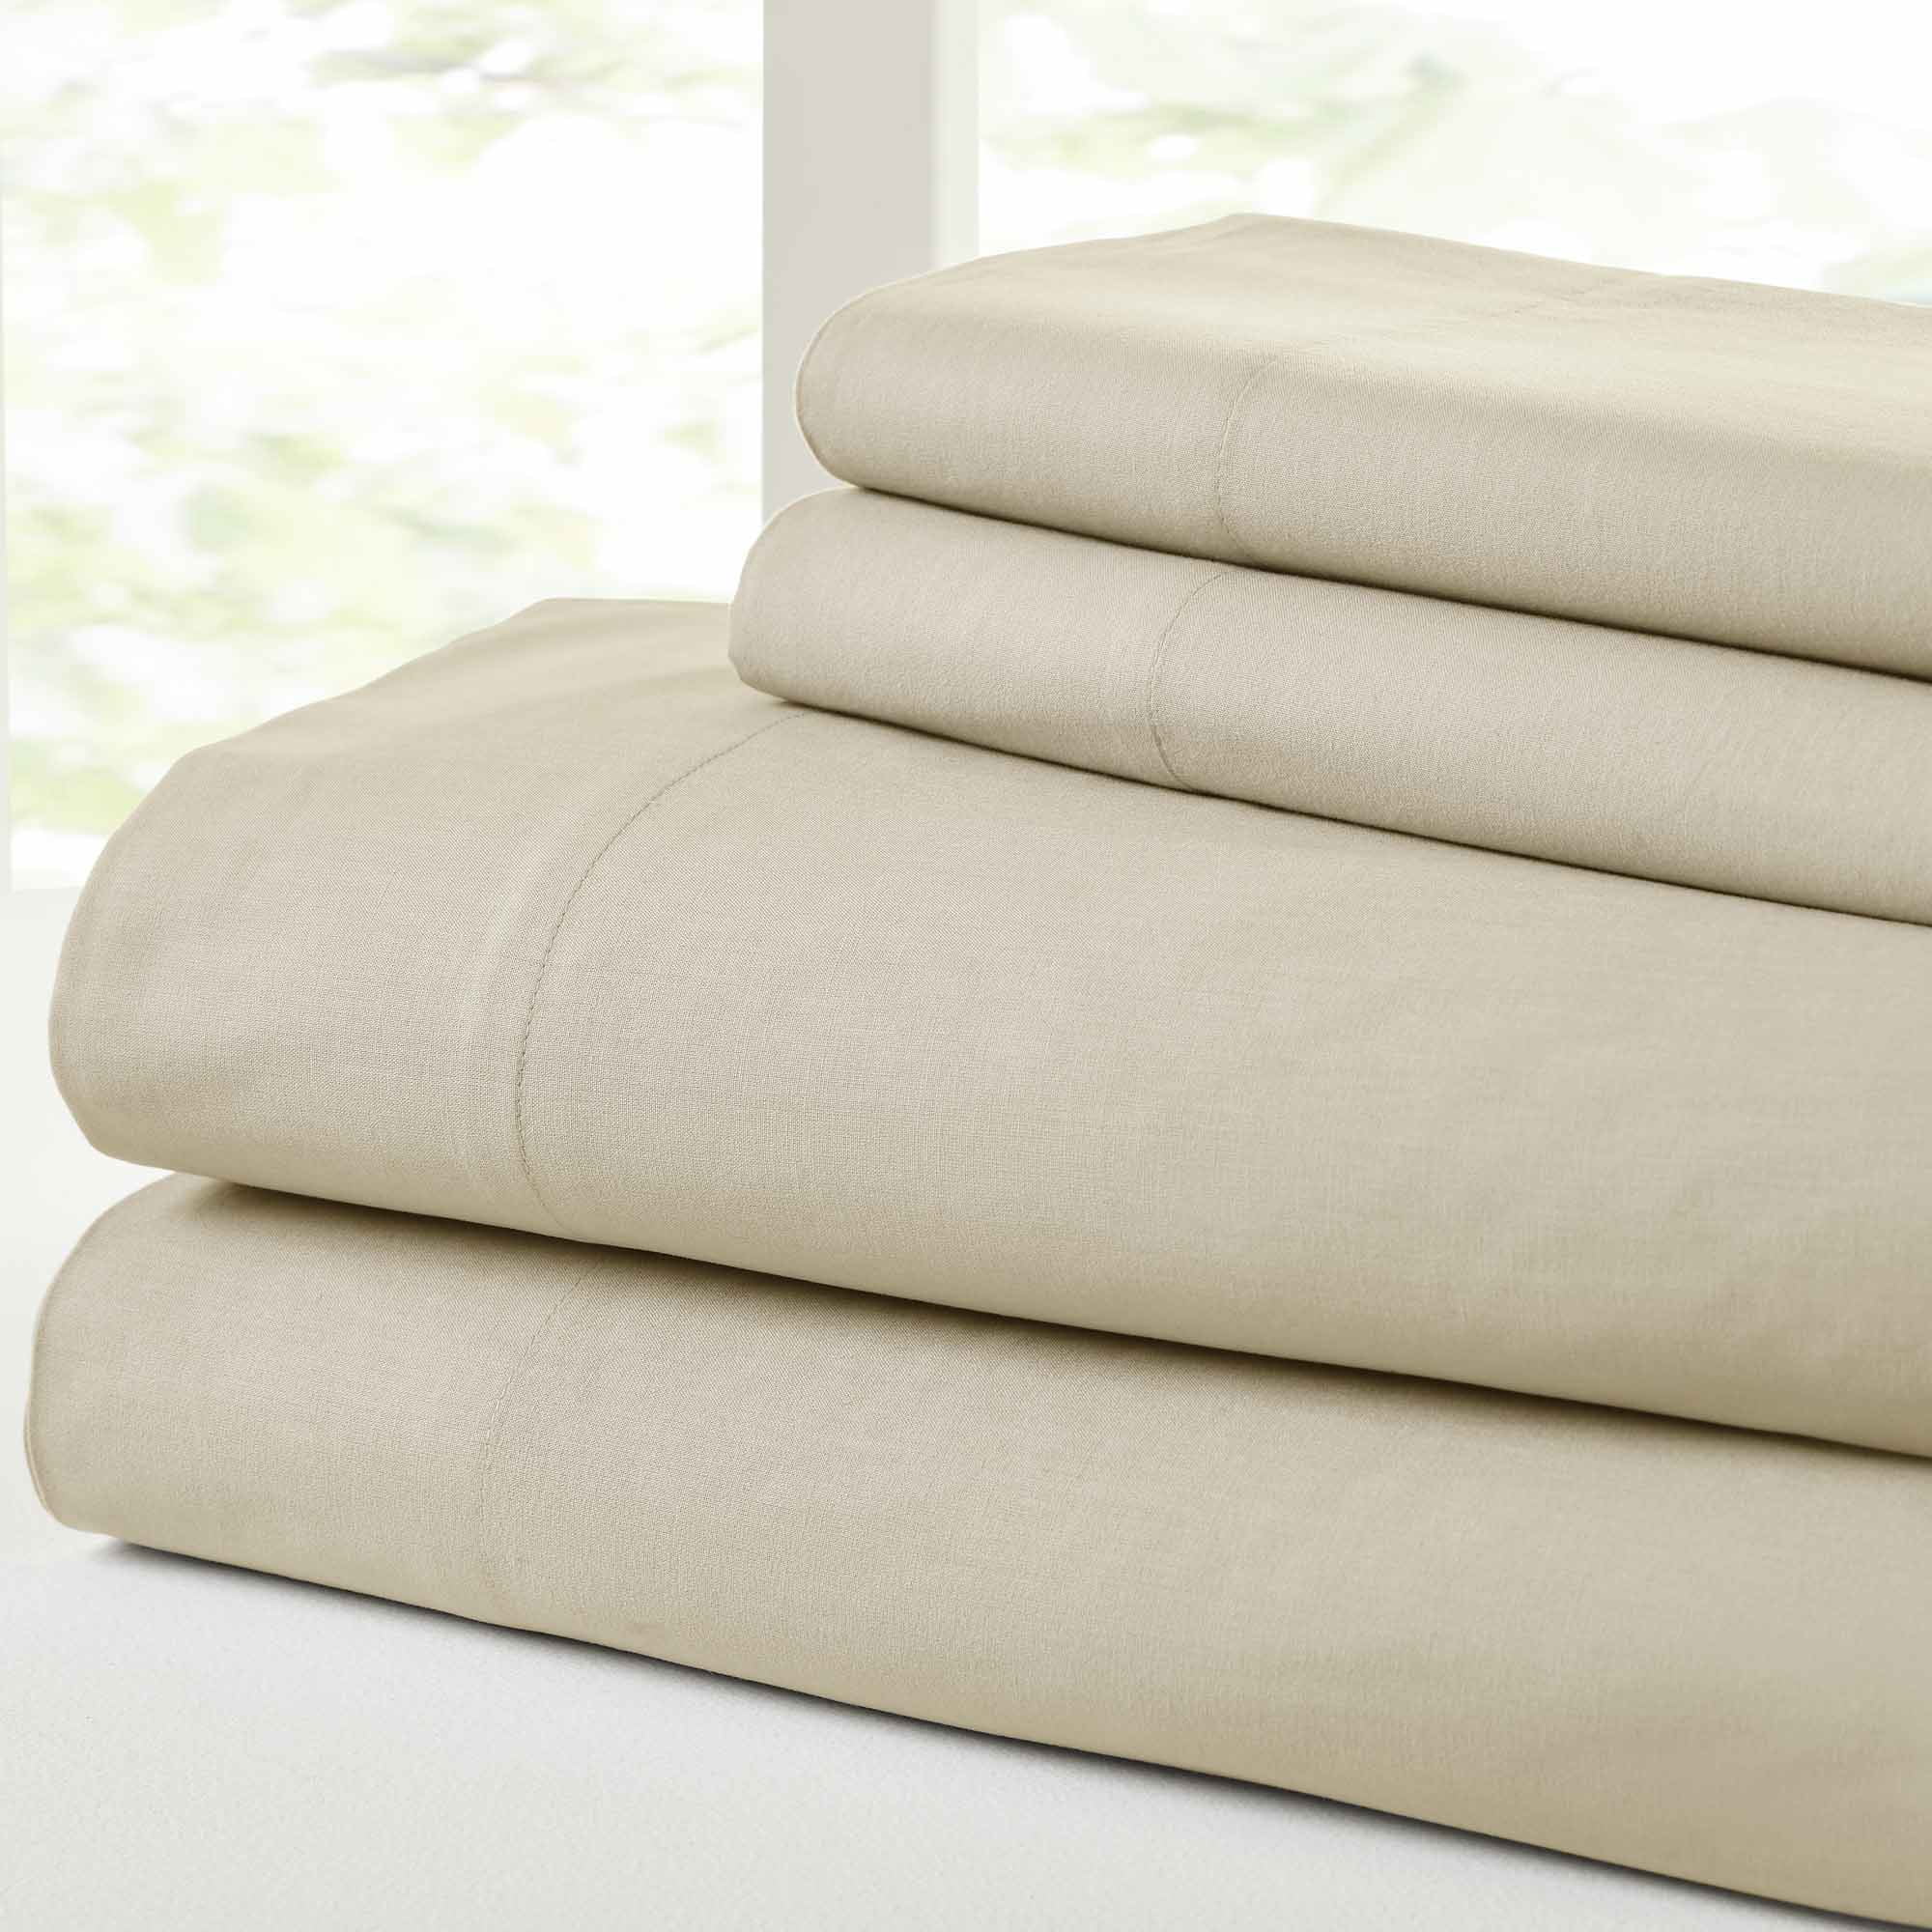 Two MAURIZIO WHITE 100% Cotton STANDARD/QUEEN Pillowcases 2 